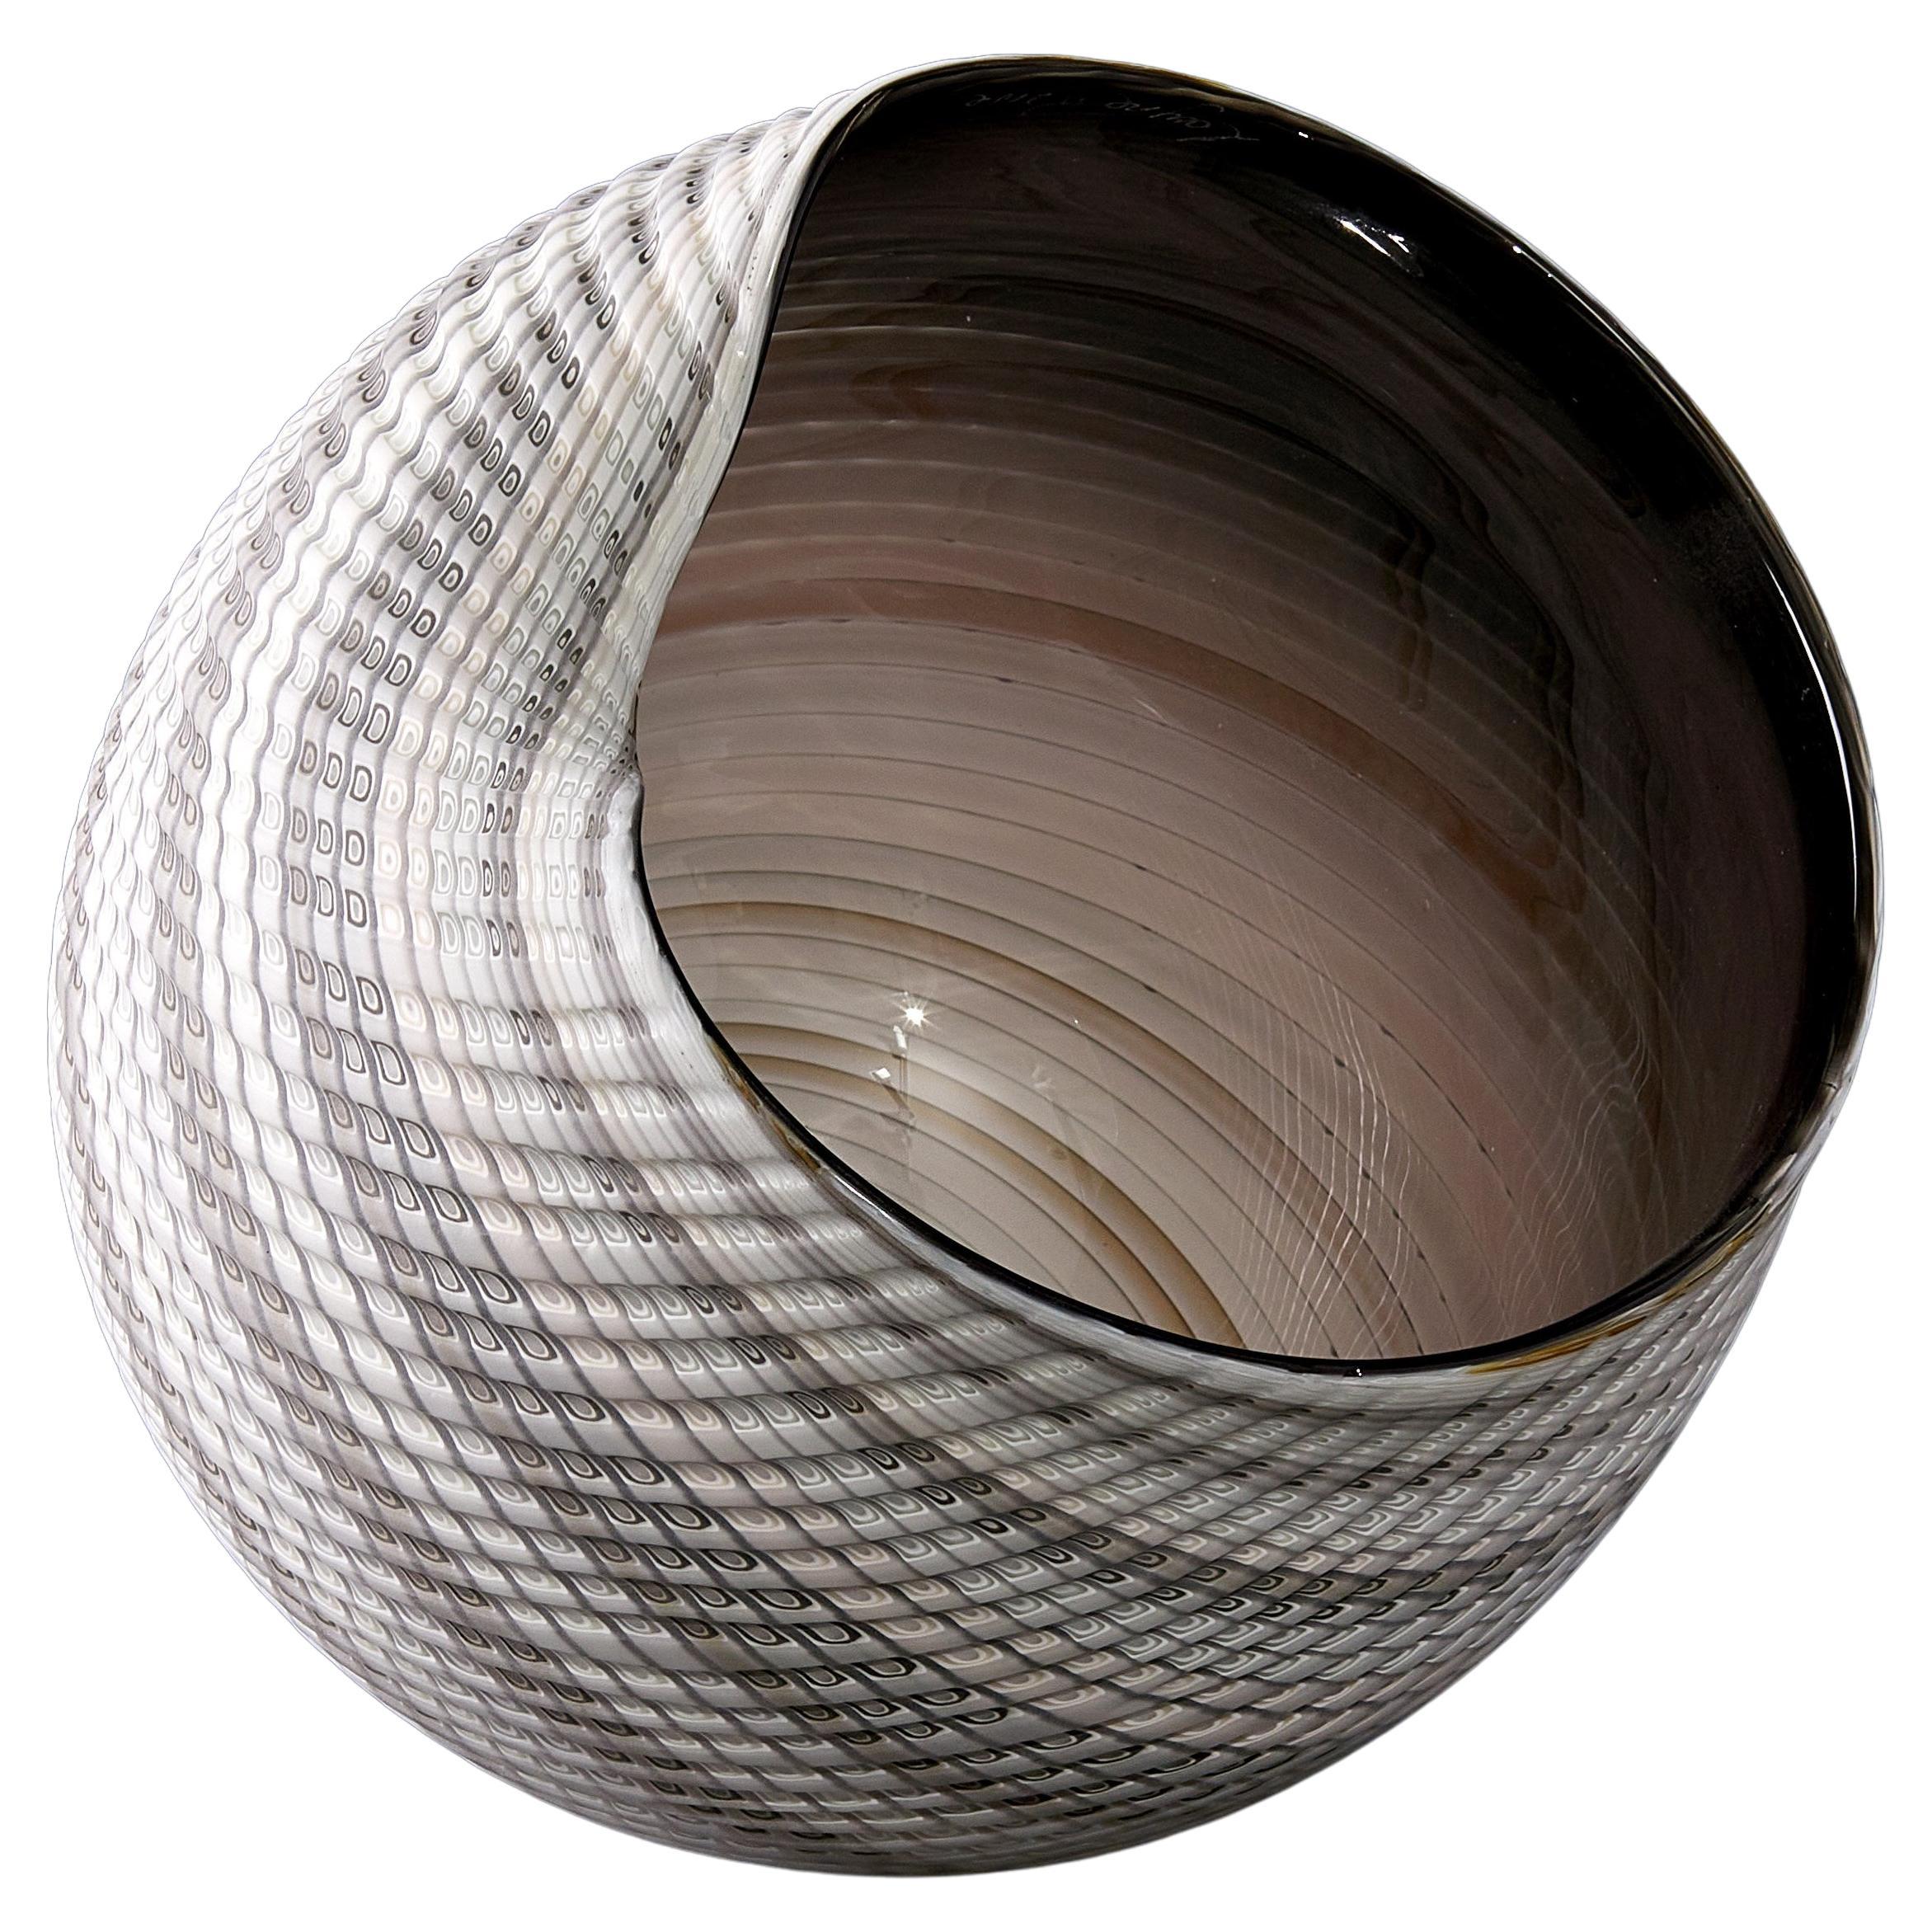 Woven Mandala No 10, an Organic Textured Glass Sculptural Vessel by Layne Rowe